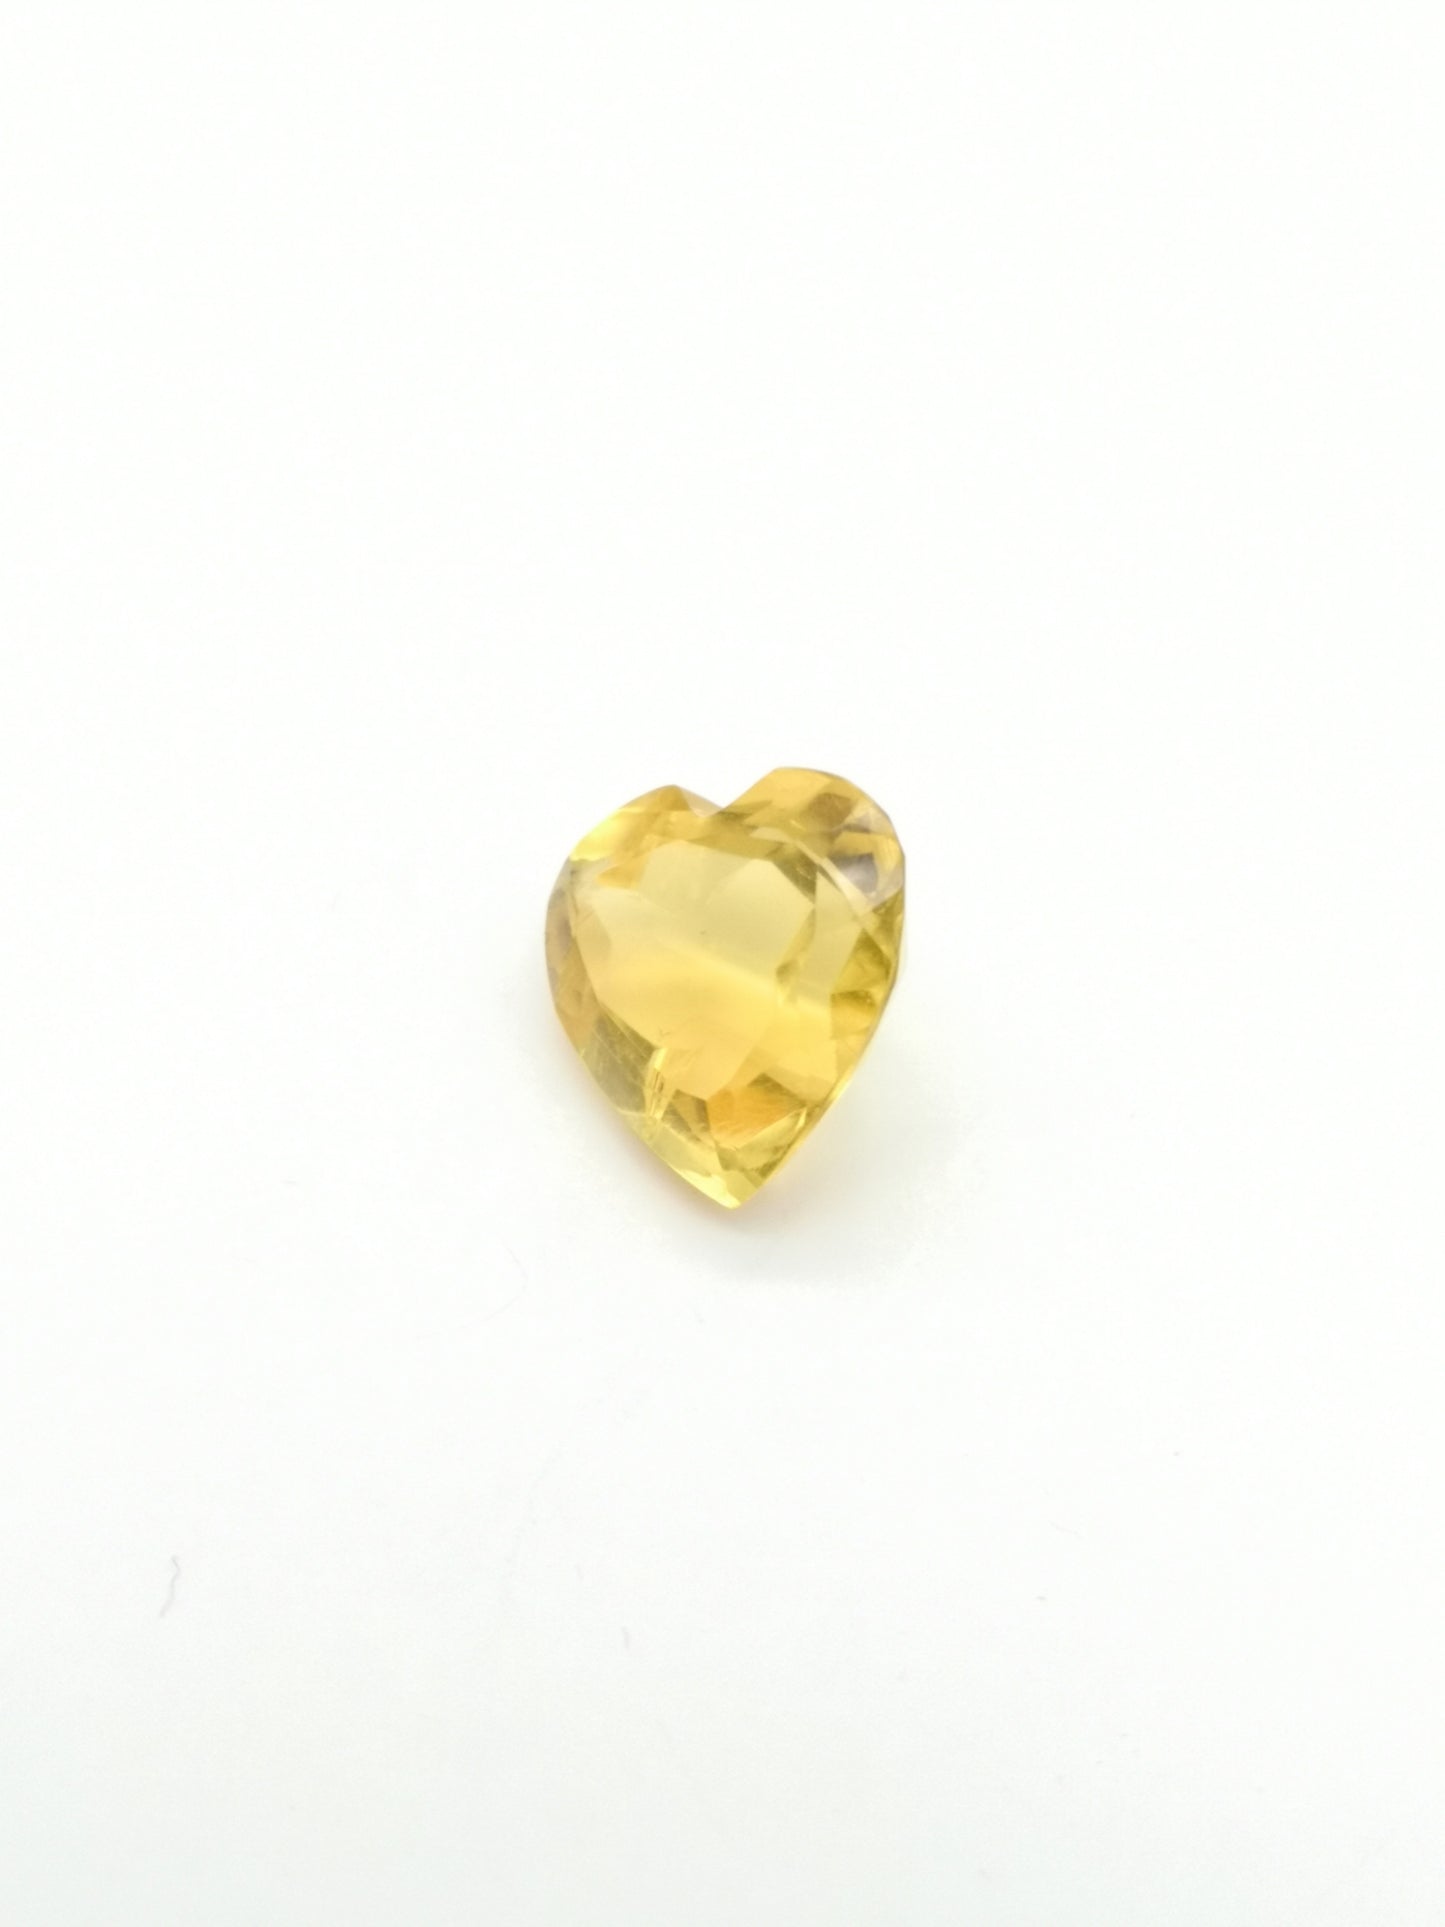 Pavan Jewelry - Natural heart citrine quartz